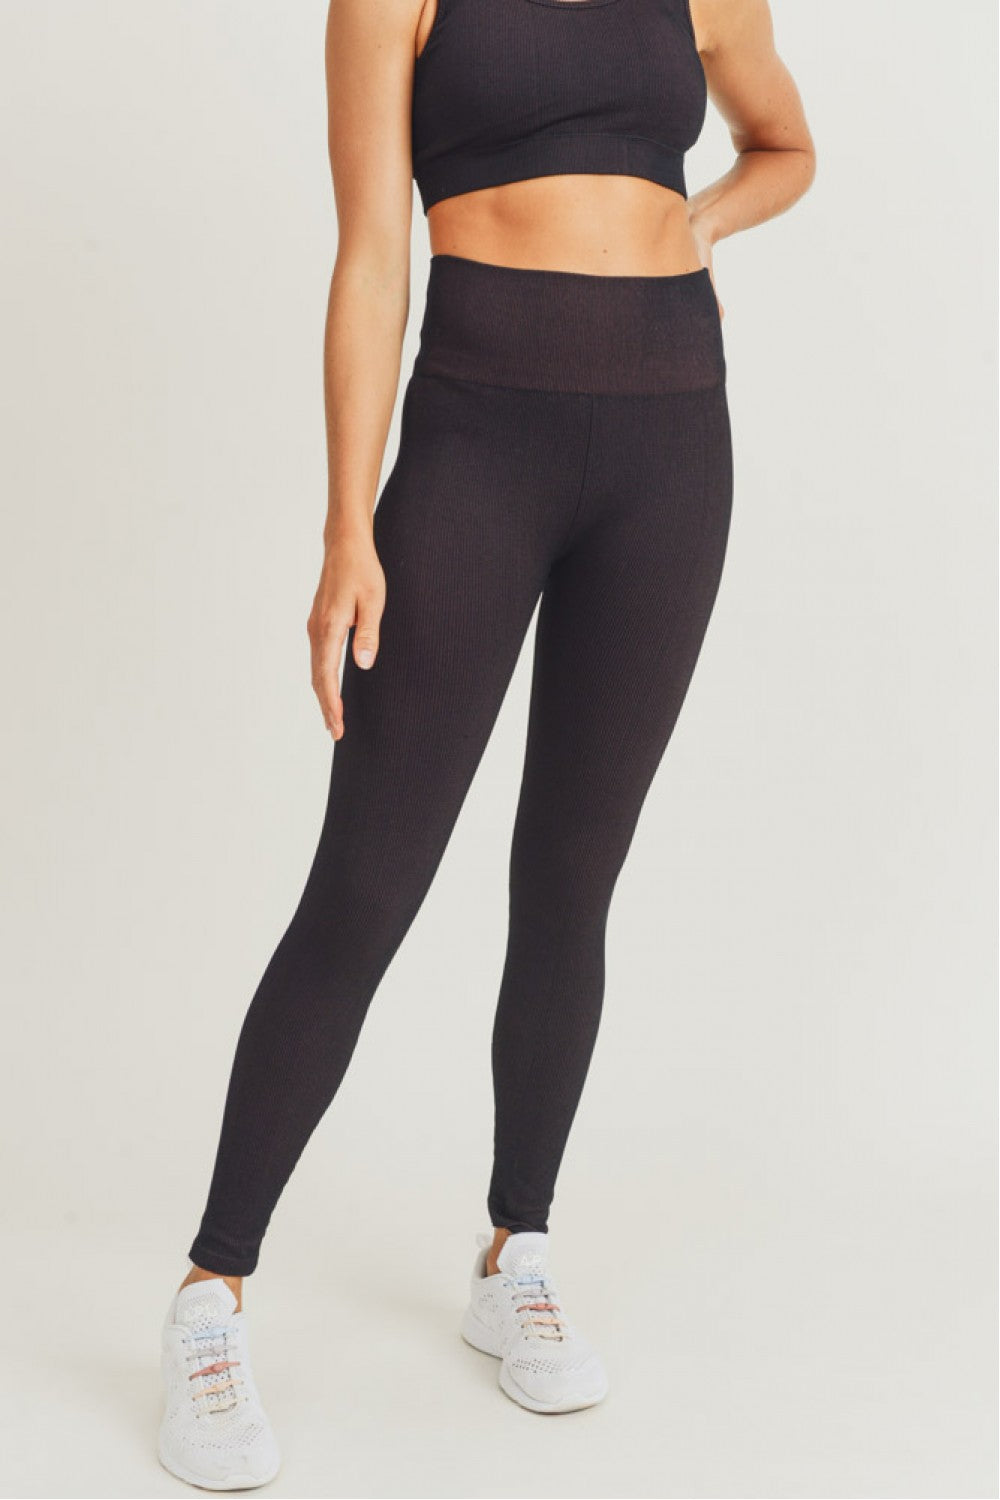 Black Capri (3/4 length) Leggings - BeKeane Healthy & Fit